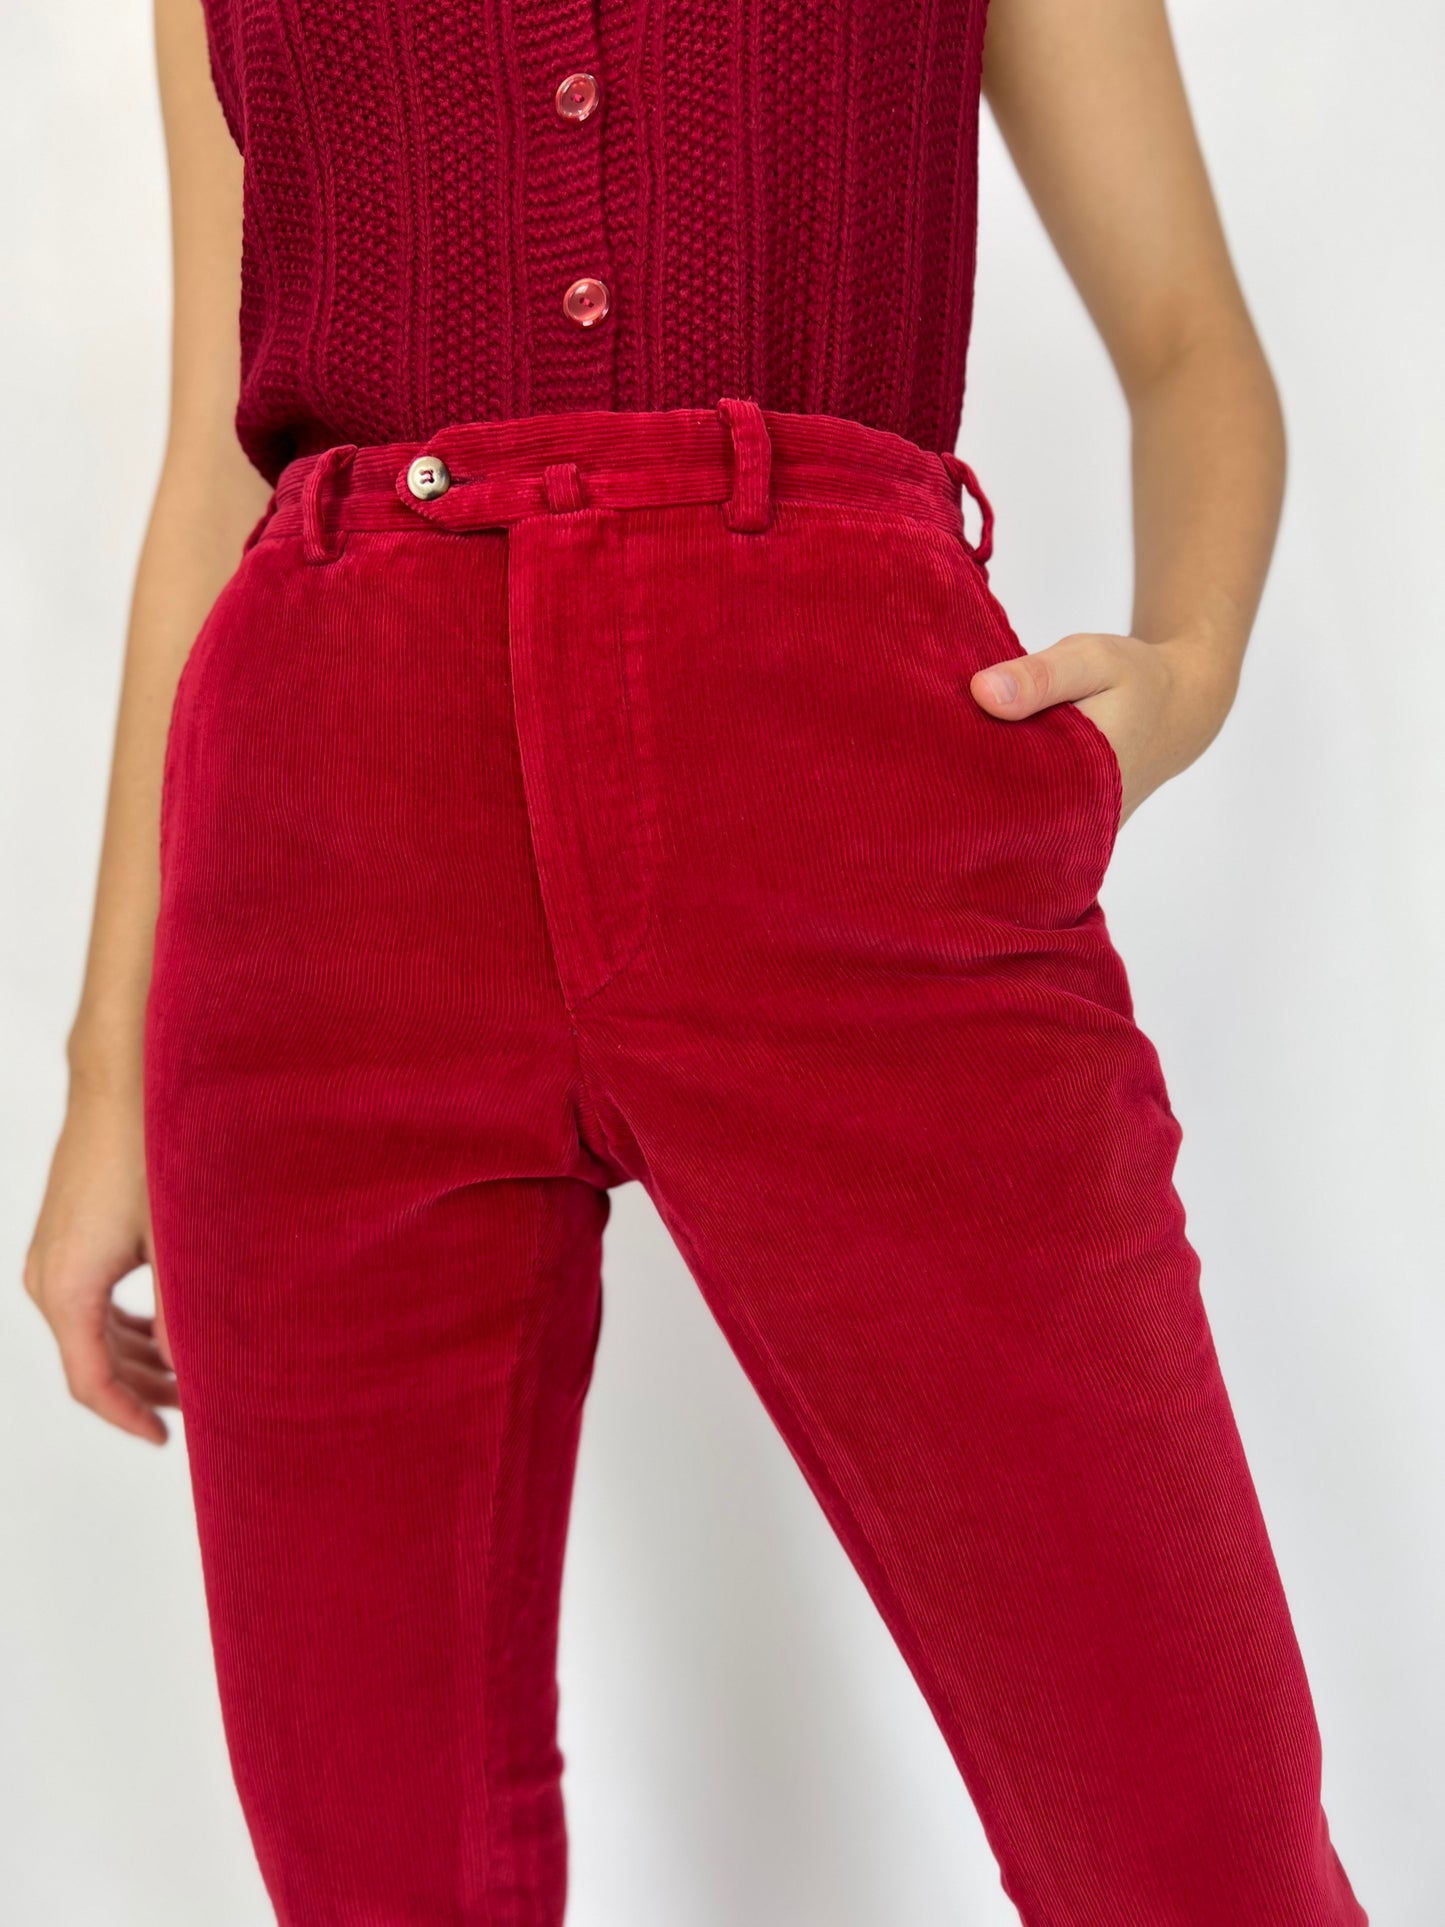 Pantaloni corduroy rosu superb